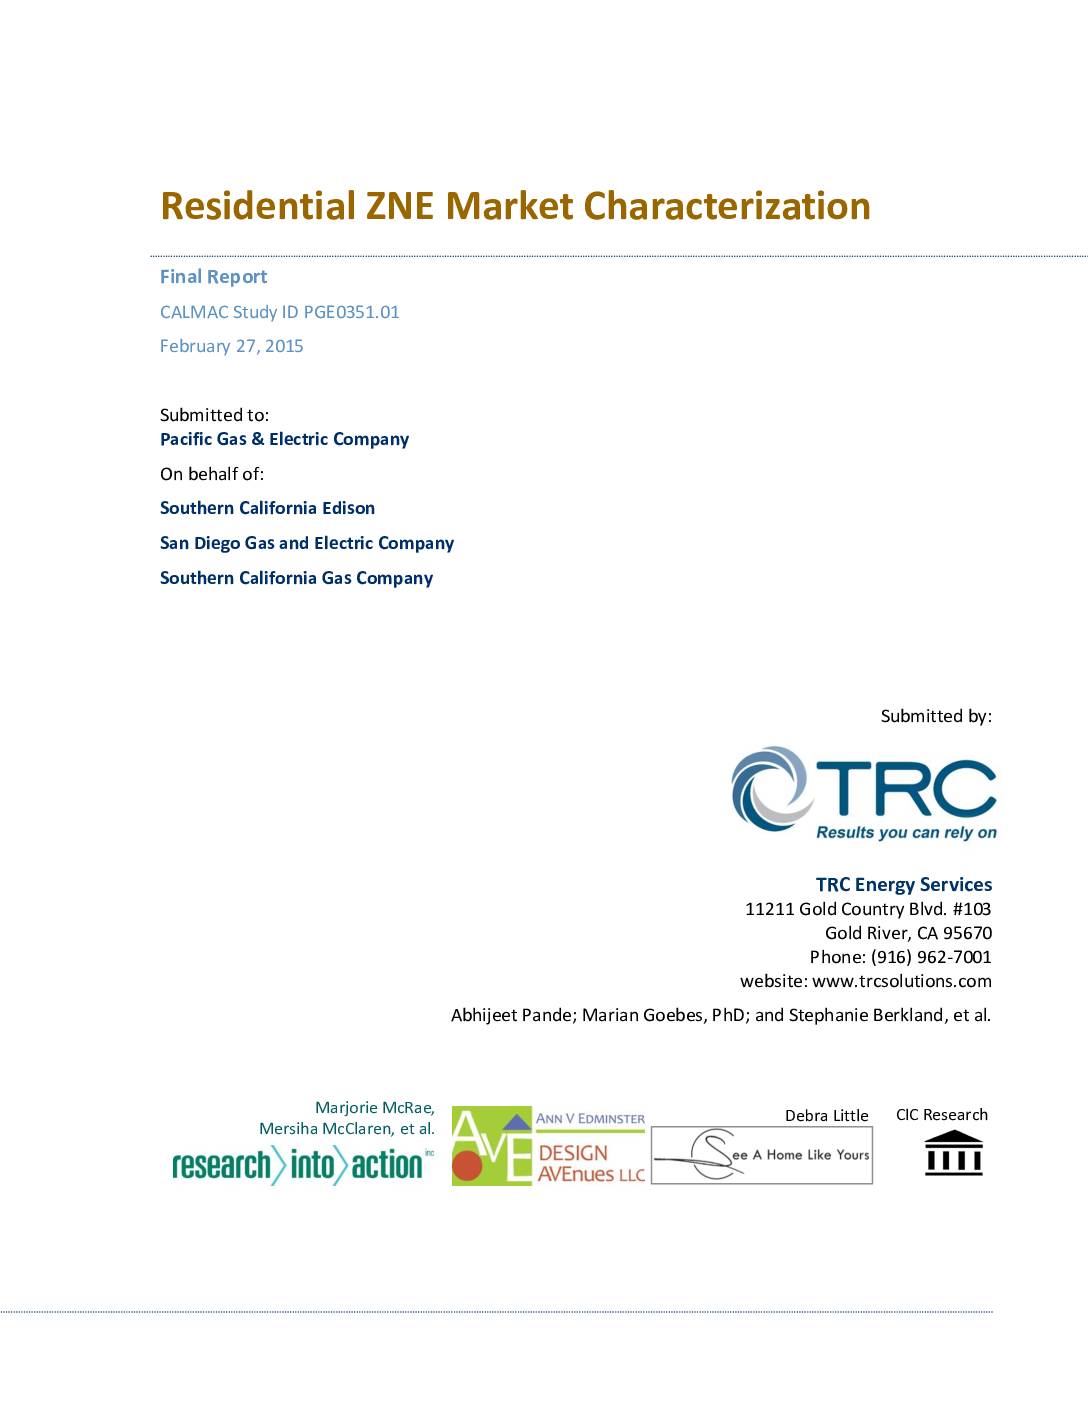 Residential Zero Net Energy Market Characterisation